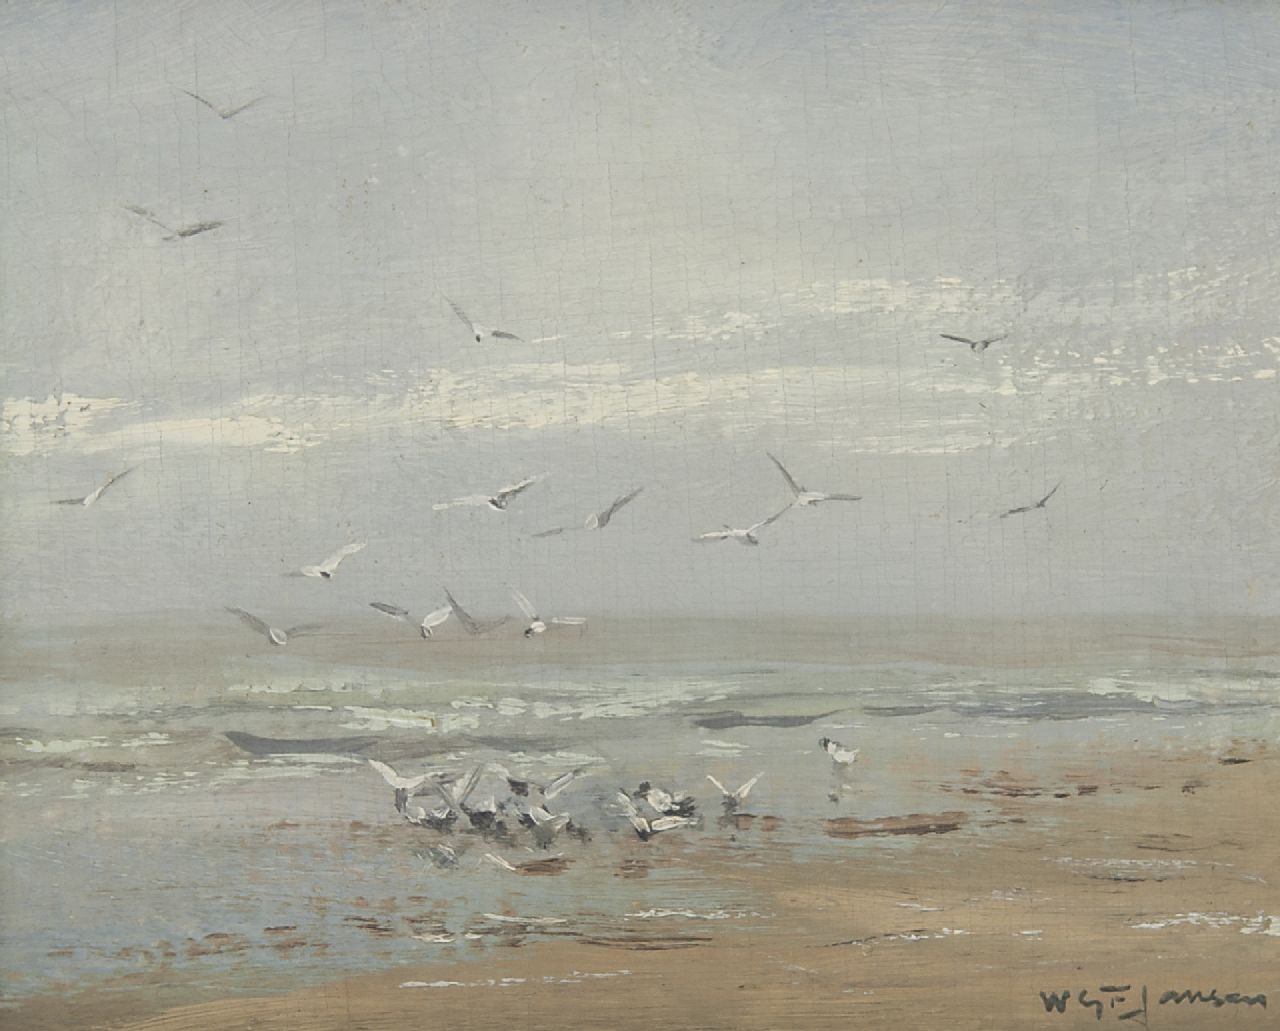 Jansen W.G.F.  | 'Willem' George Frederik Jansen, Seagulls on the coast, oil on canvas 19.5 x 26.0 cm, signed l.r.